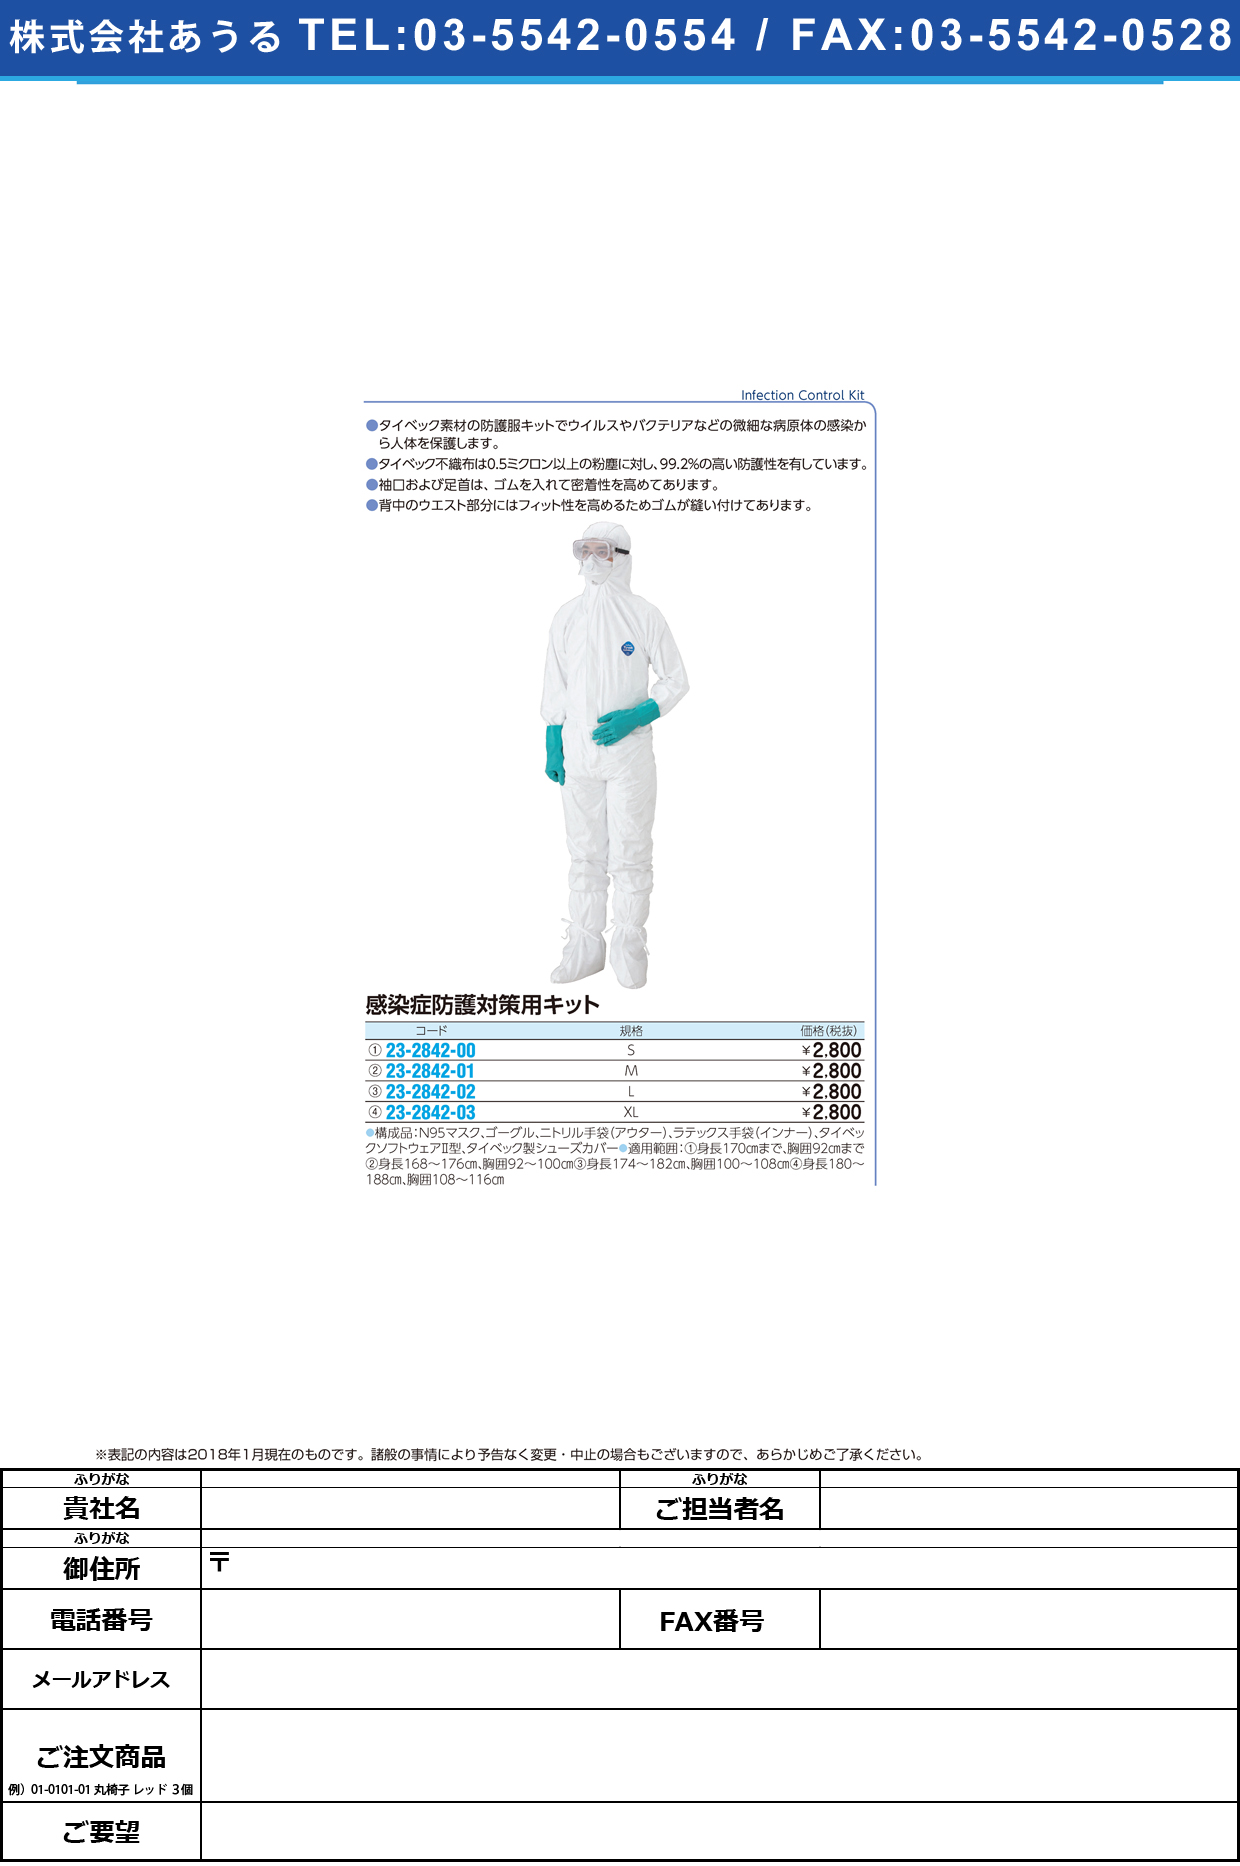 (23-2842-02)感染症防護対策用キット ICK-2(L) ｶﾝｾﾝｼｮｳﾎﾞｳｺﾞﾀｲｻｸﾖｳ【1組単位】【2019年カタログ商品】